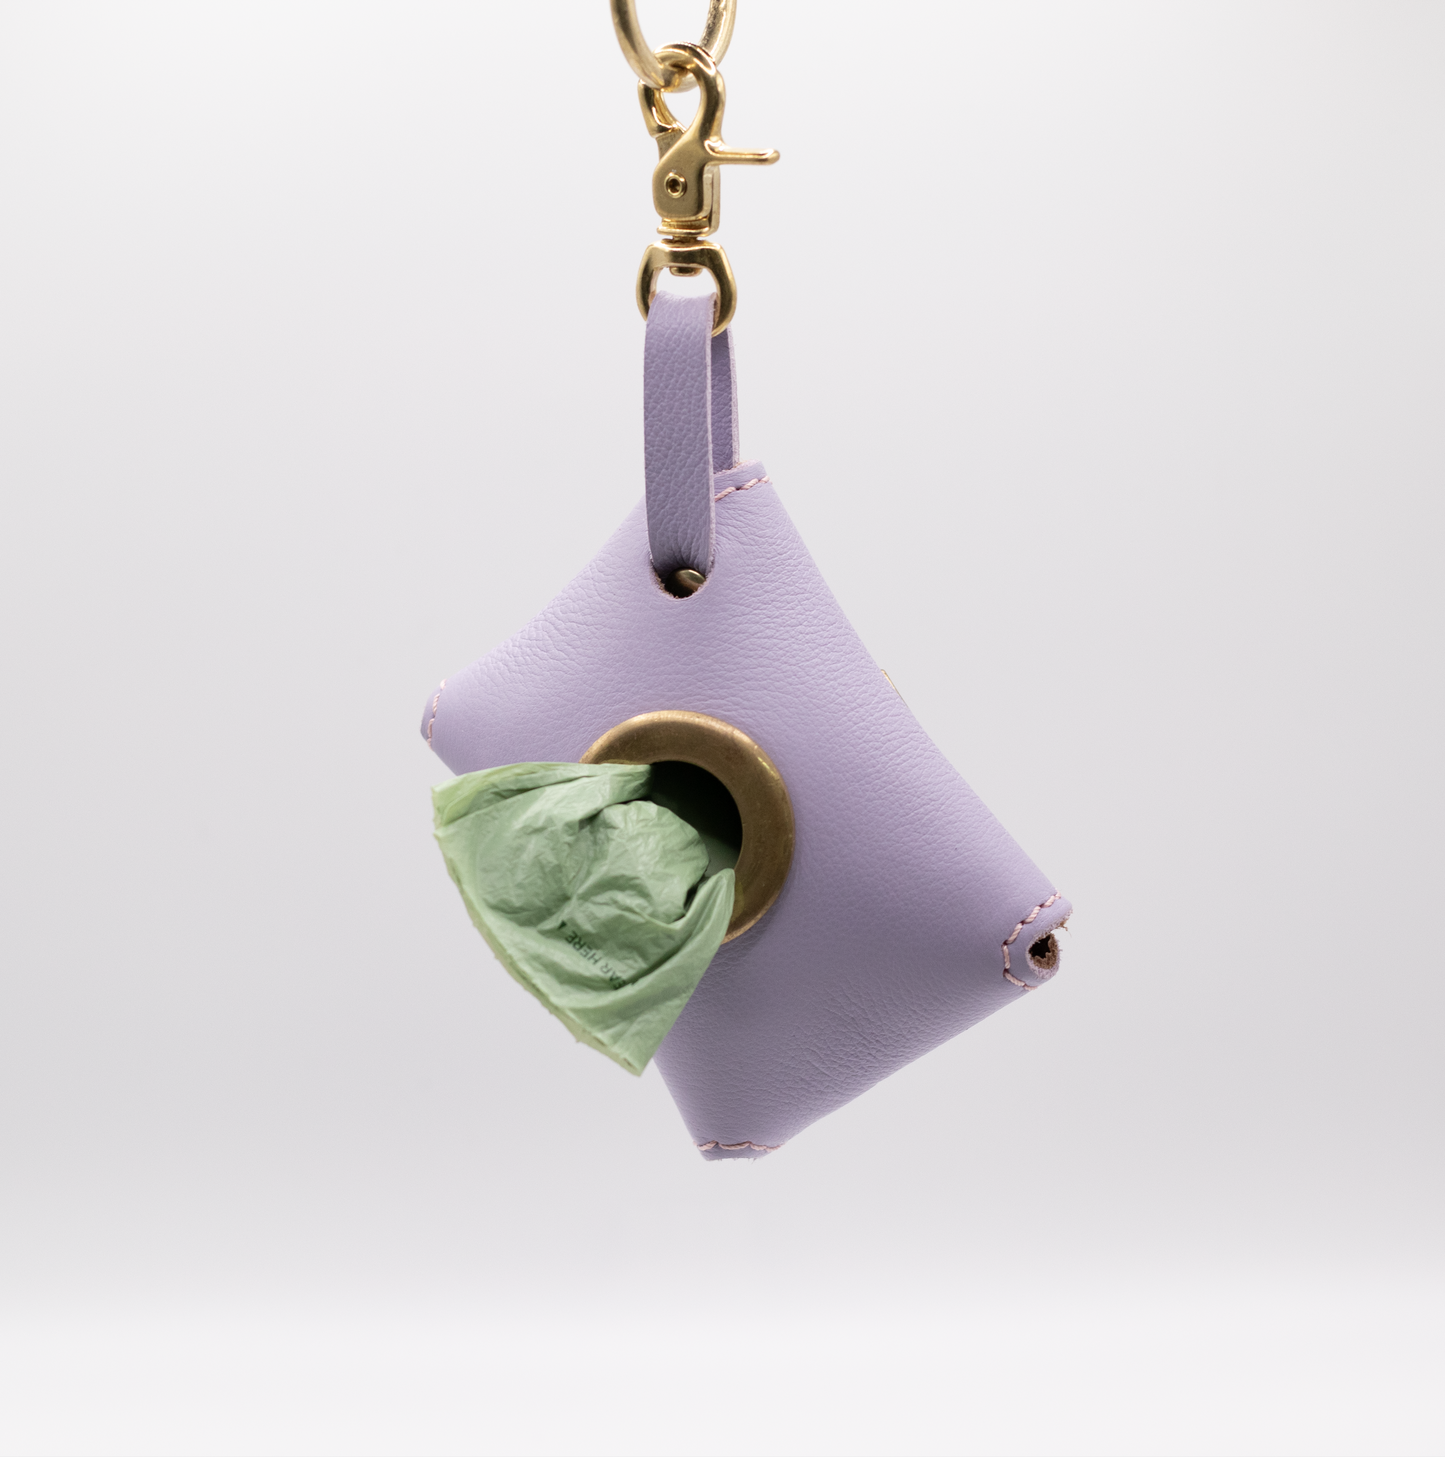 D&H PooSh - Soft Leather Poo Bag Dispenser Lilac